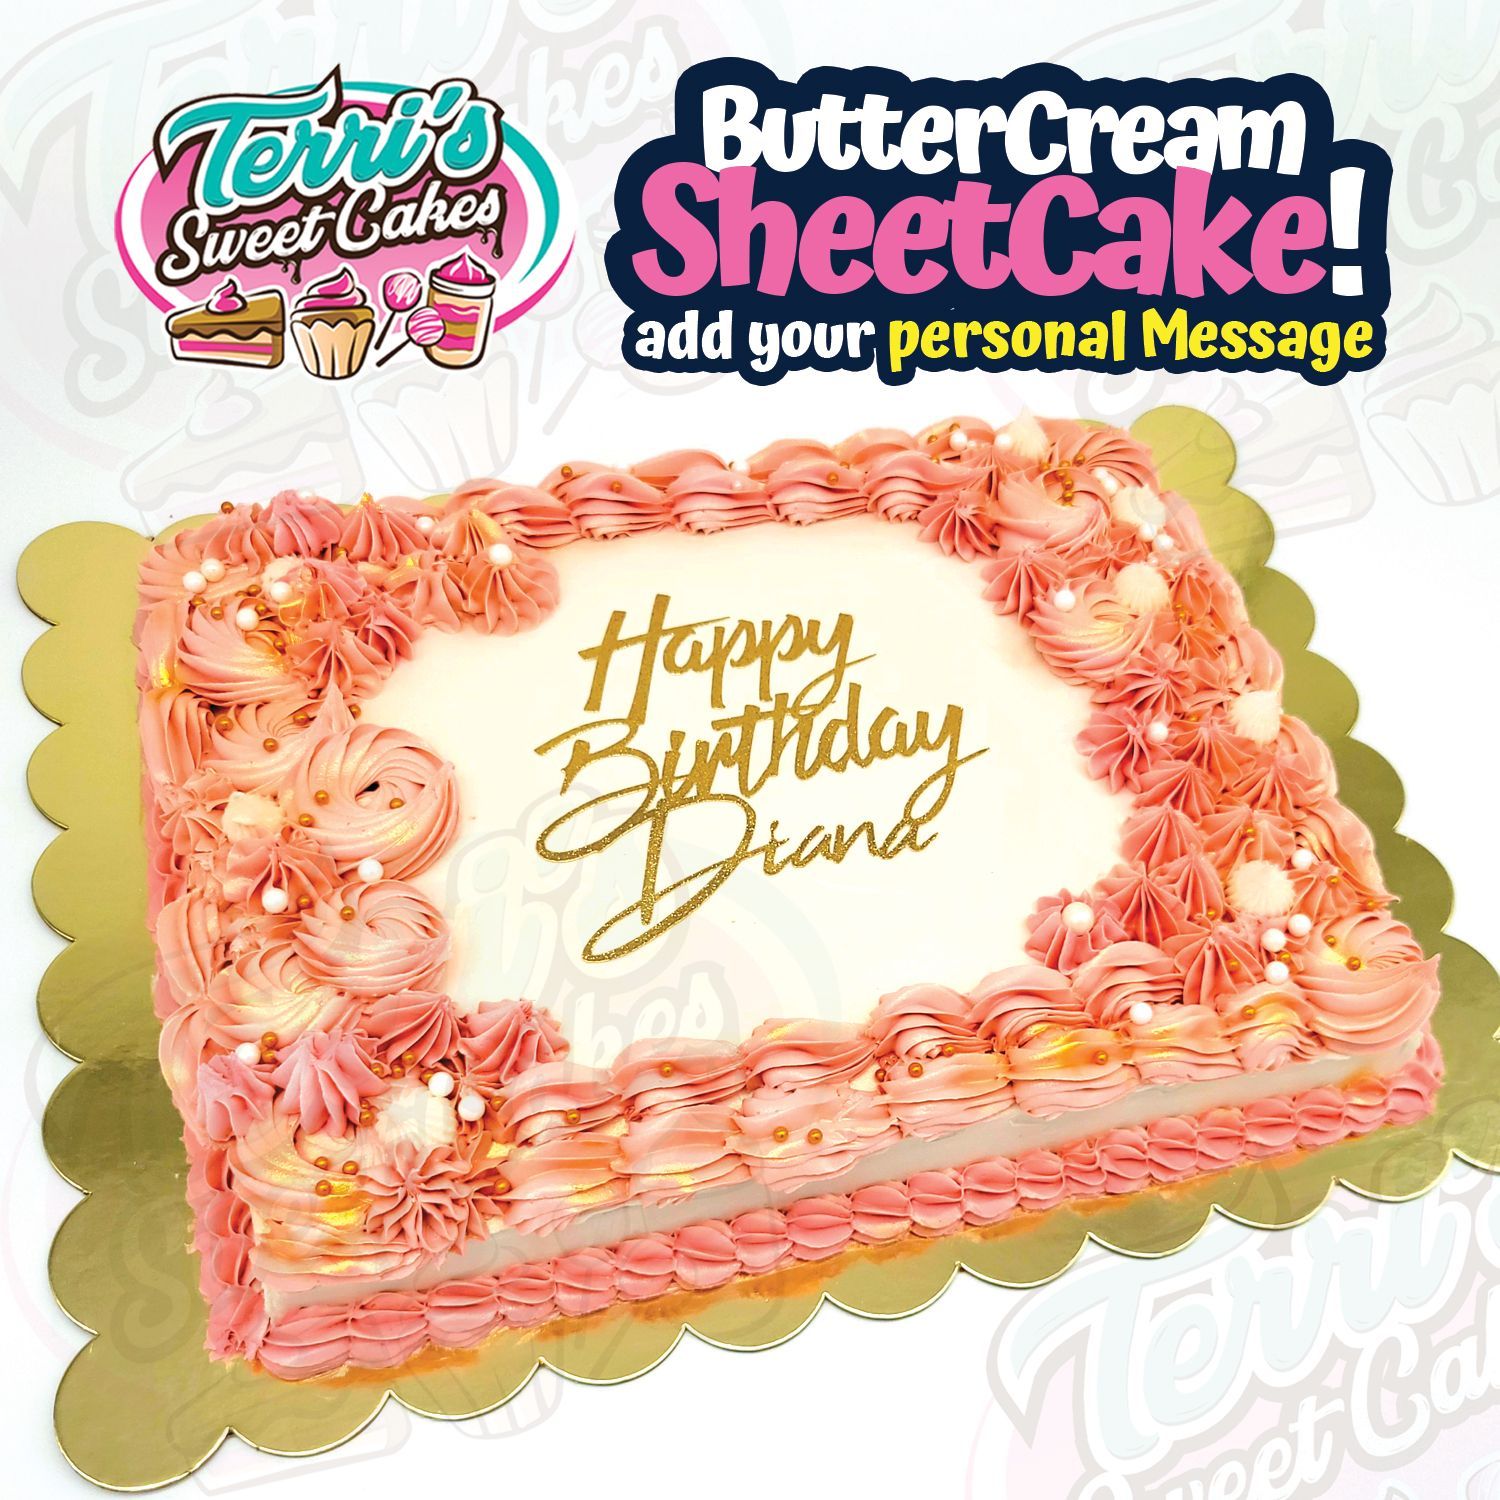 Buttercream Sheet Cake by Terri's Sweet Cakes!